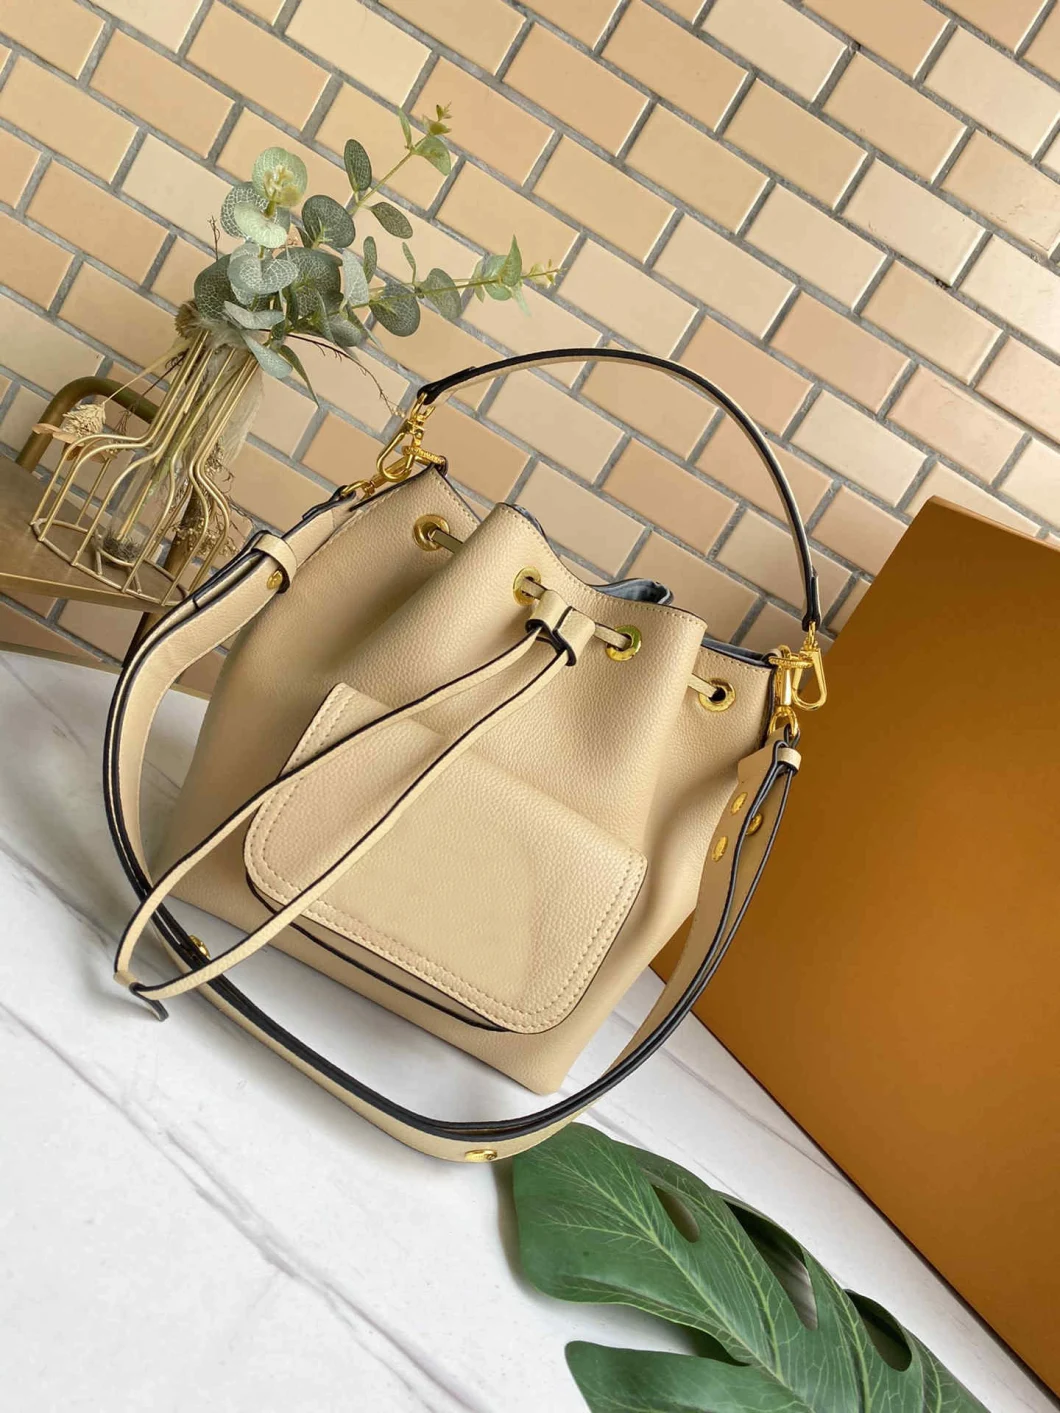 2021 Real Leather Outdoor Shopping Short Travel Fashionable Women Bucket Handbag Lady Shoulder Bag